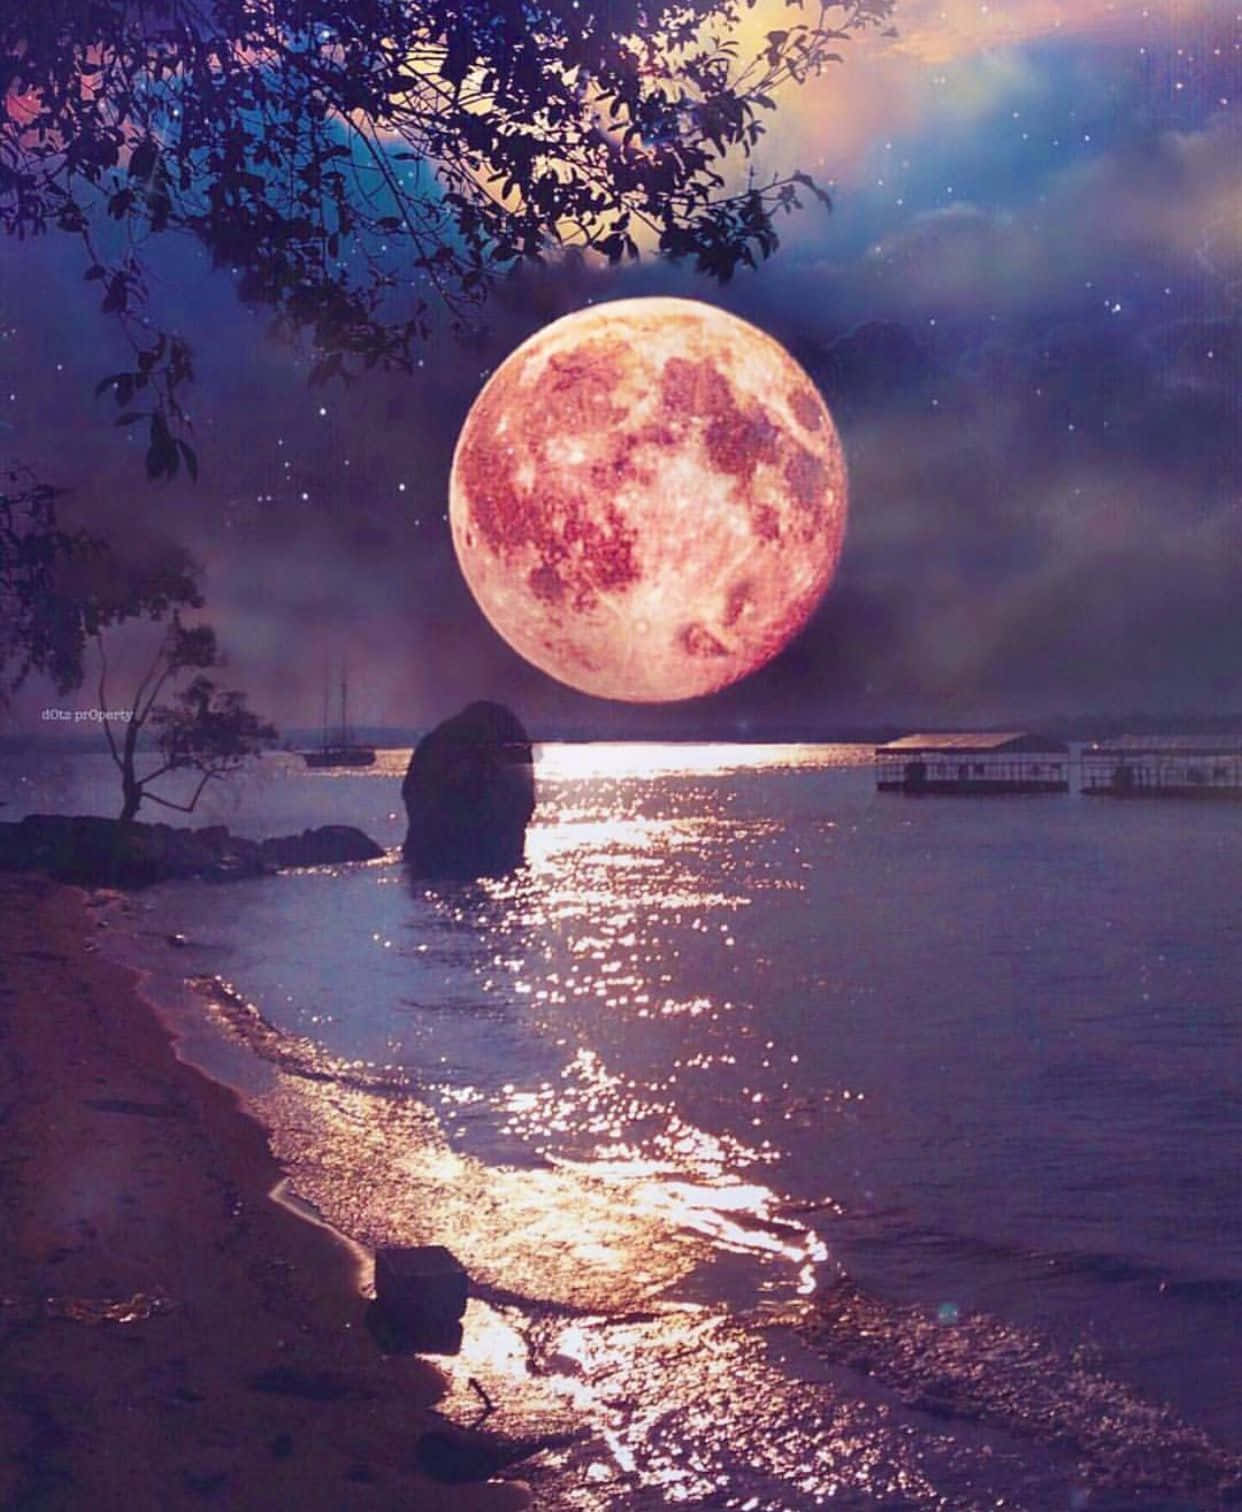 A Heavenly Scene of a Beautiful Moon Illuminating the Night Sky